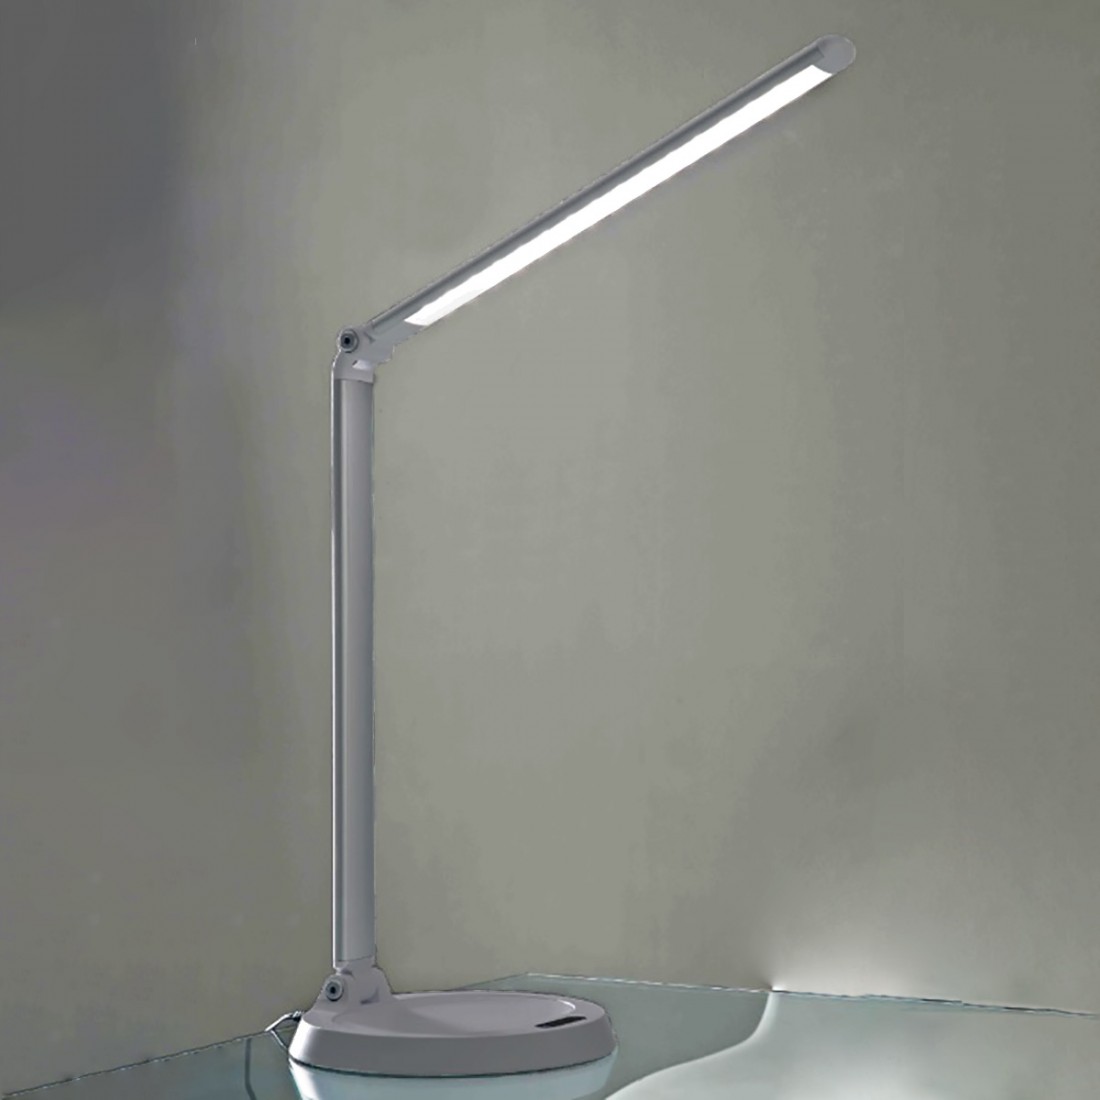 Lampe de bureau LED moderne DELTA Illuminando réglable